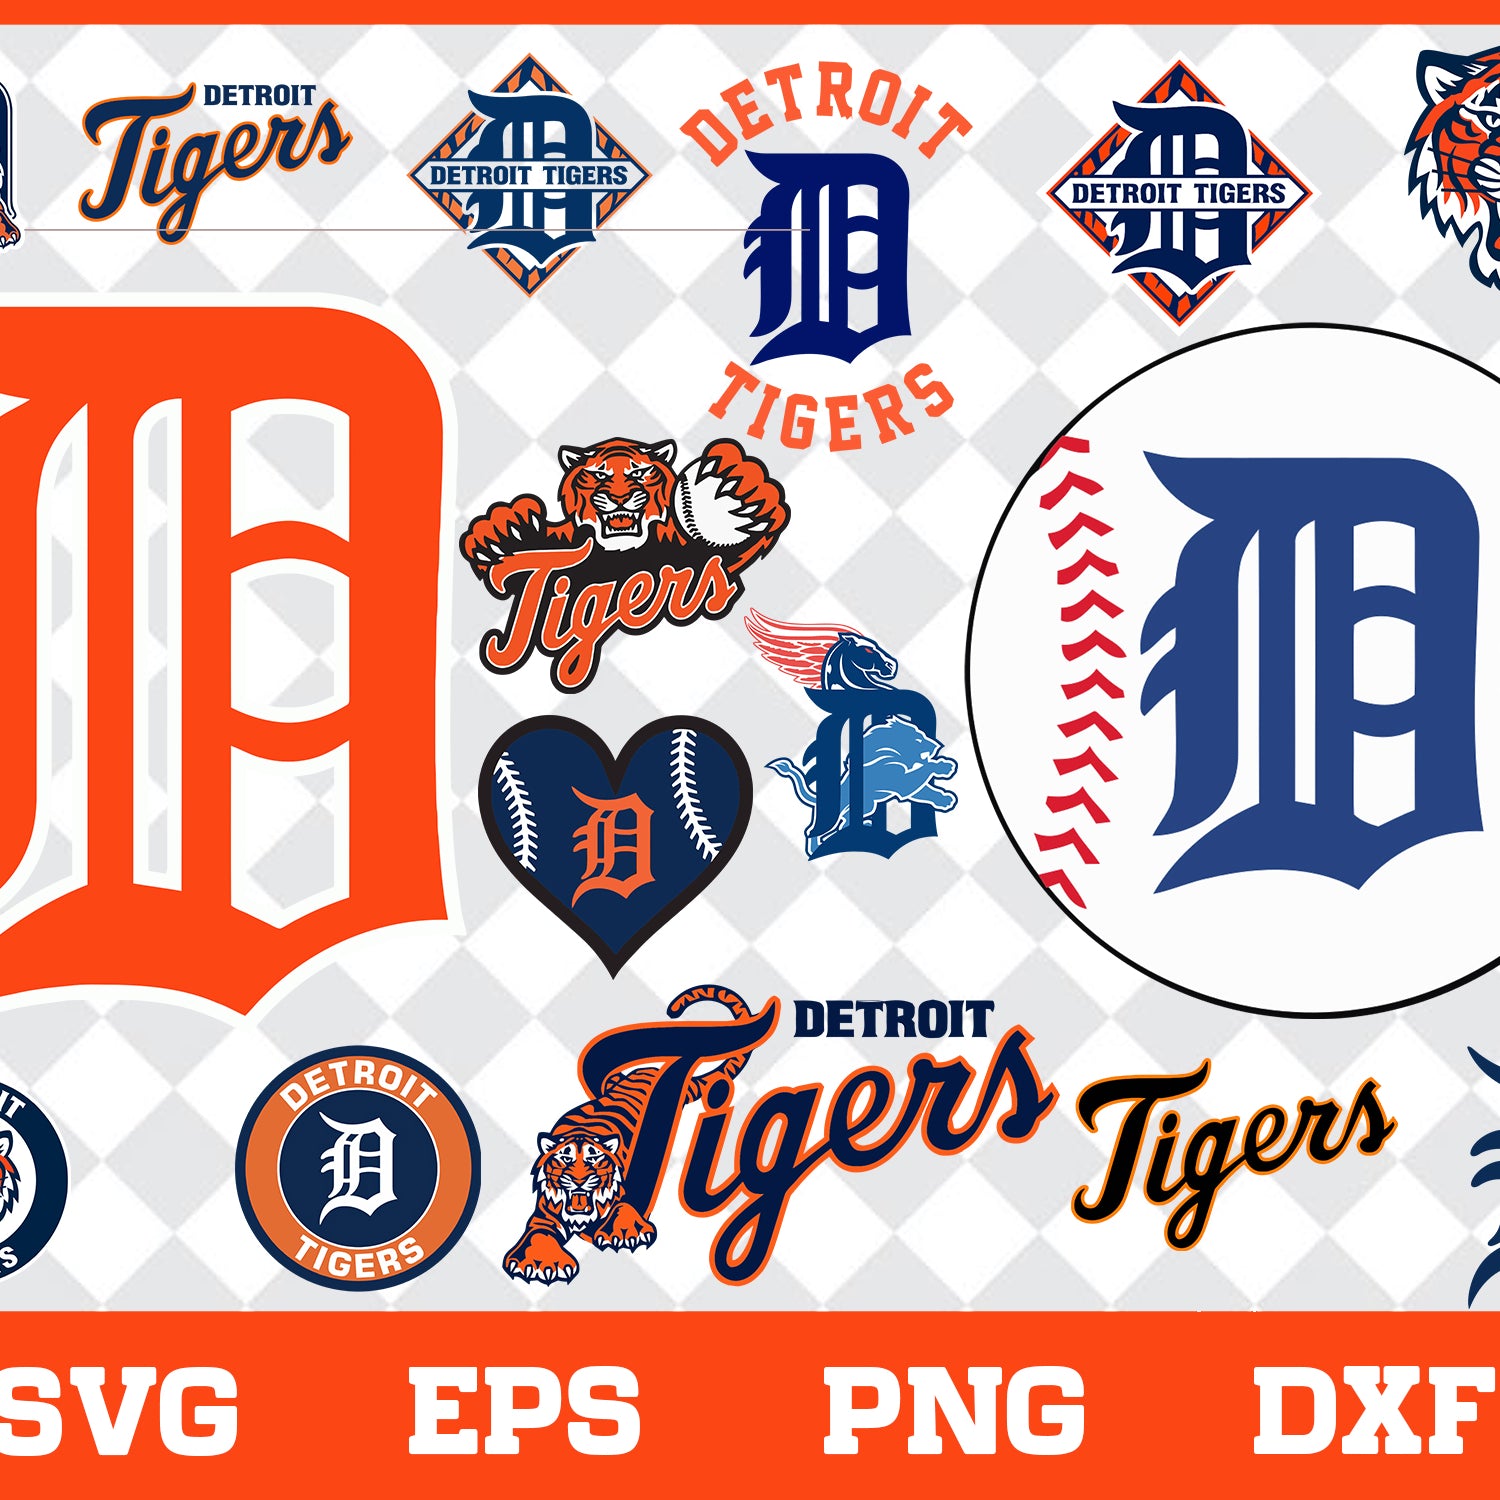 Detroit Tigers bundle svg,Detroit Tigers svg, Tigers svg, Tigers svg for cut, png, dxf, eps digital file MBL30012110